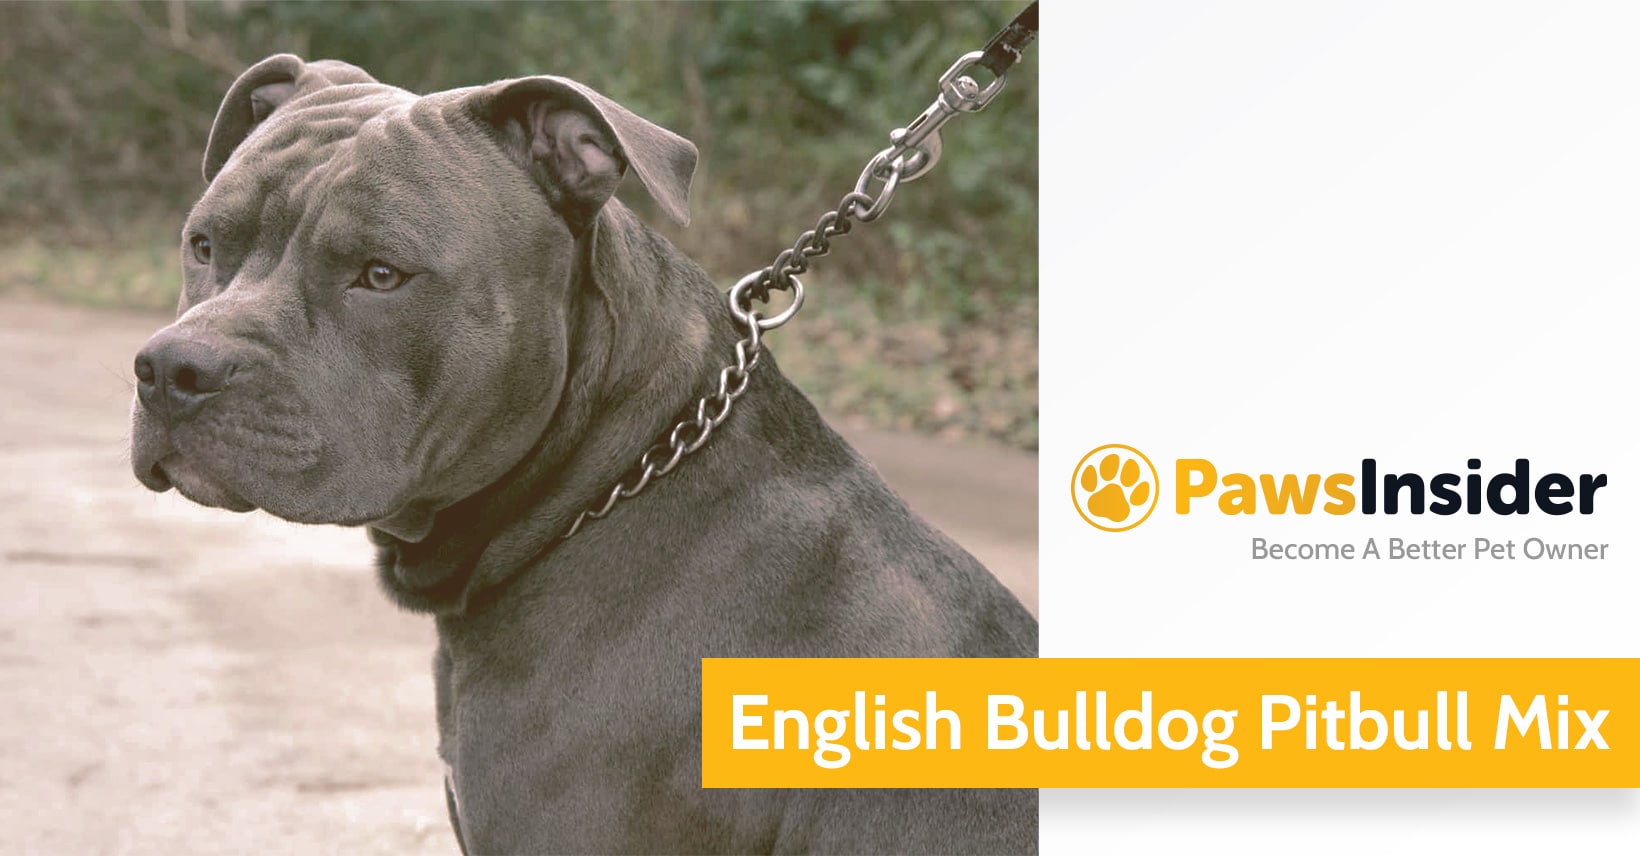 English Bulldog Pitbull Mix: Everything You Need To Know